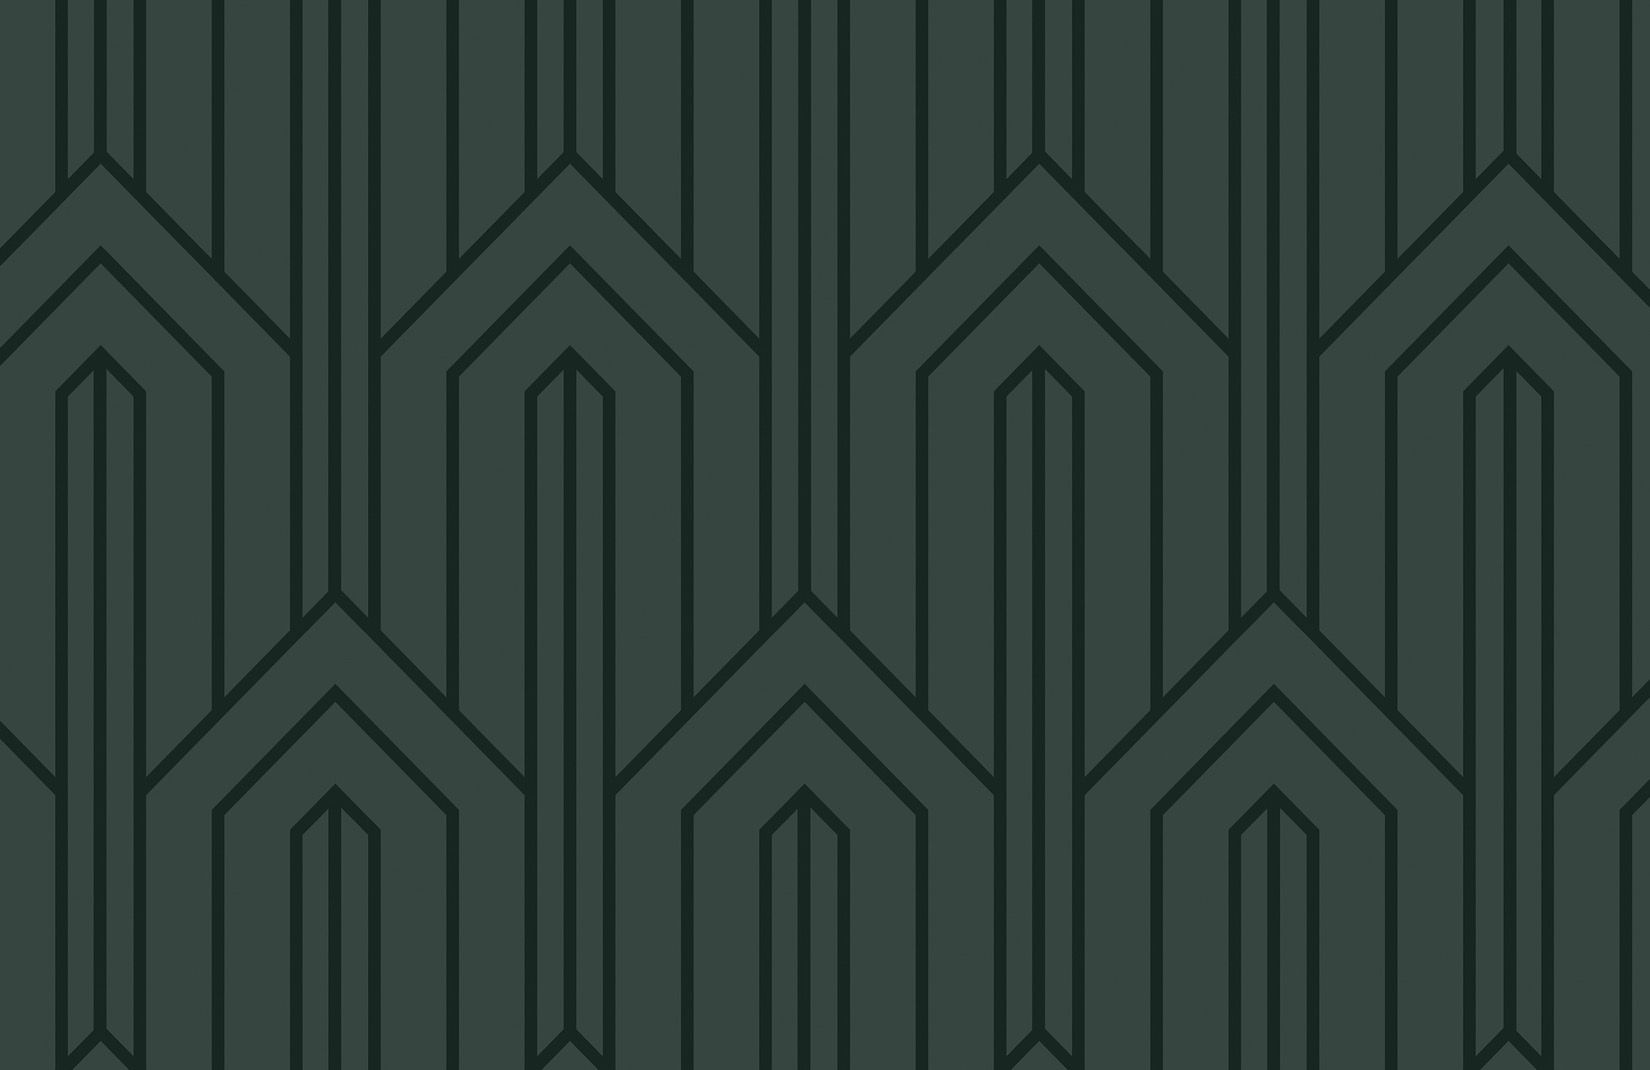 8. Dark Green and Geometric Nail Art Design - wide 7